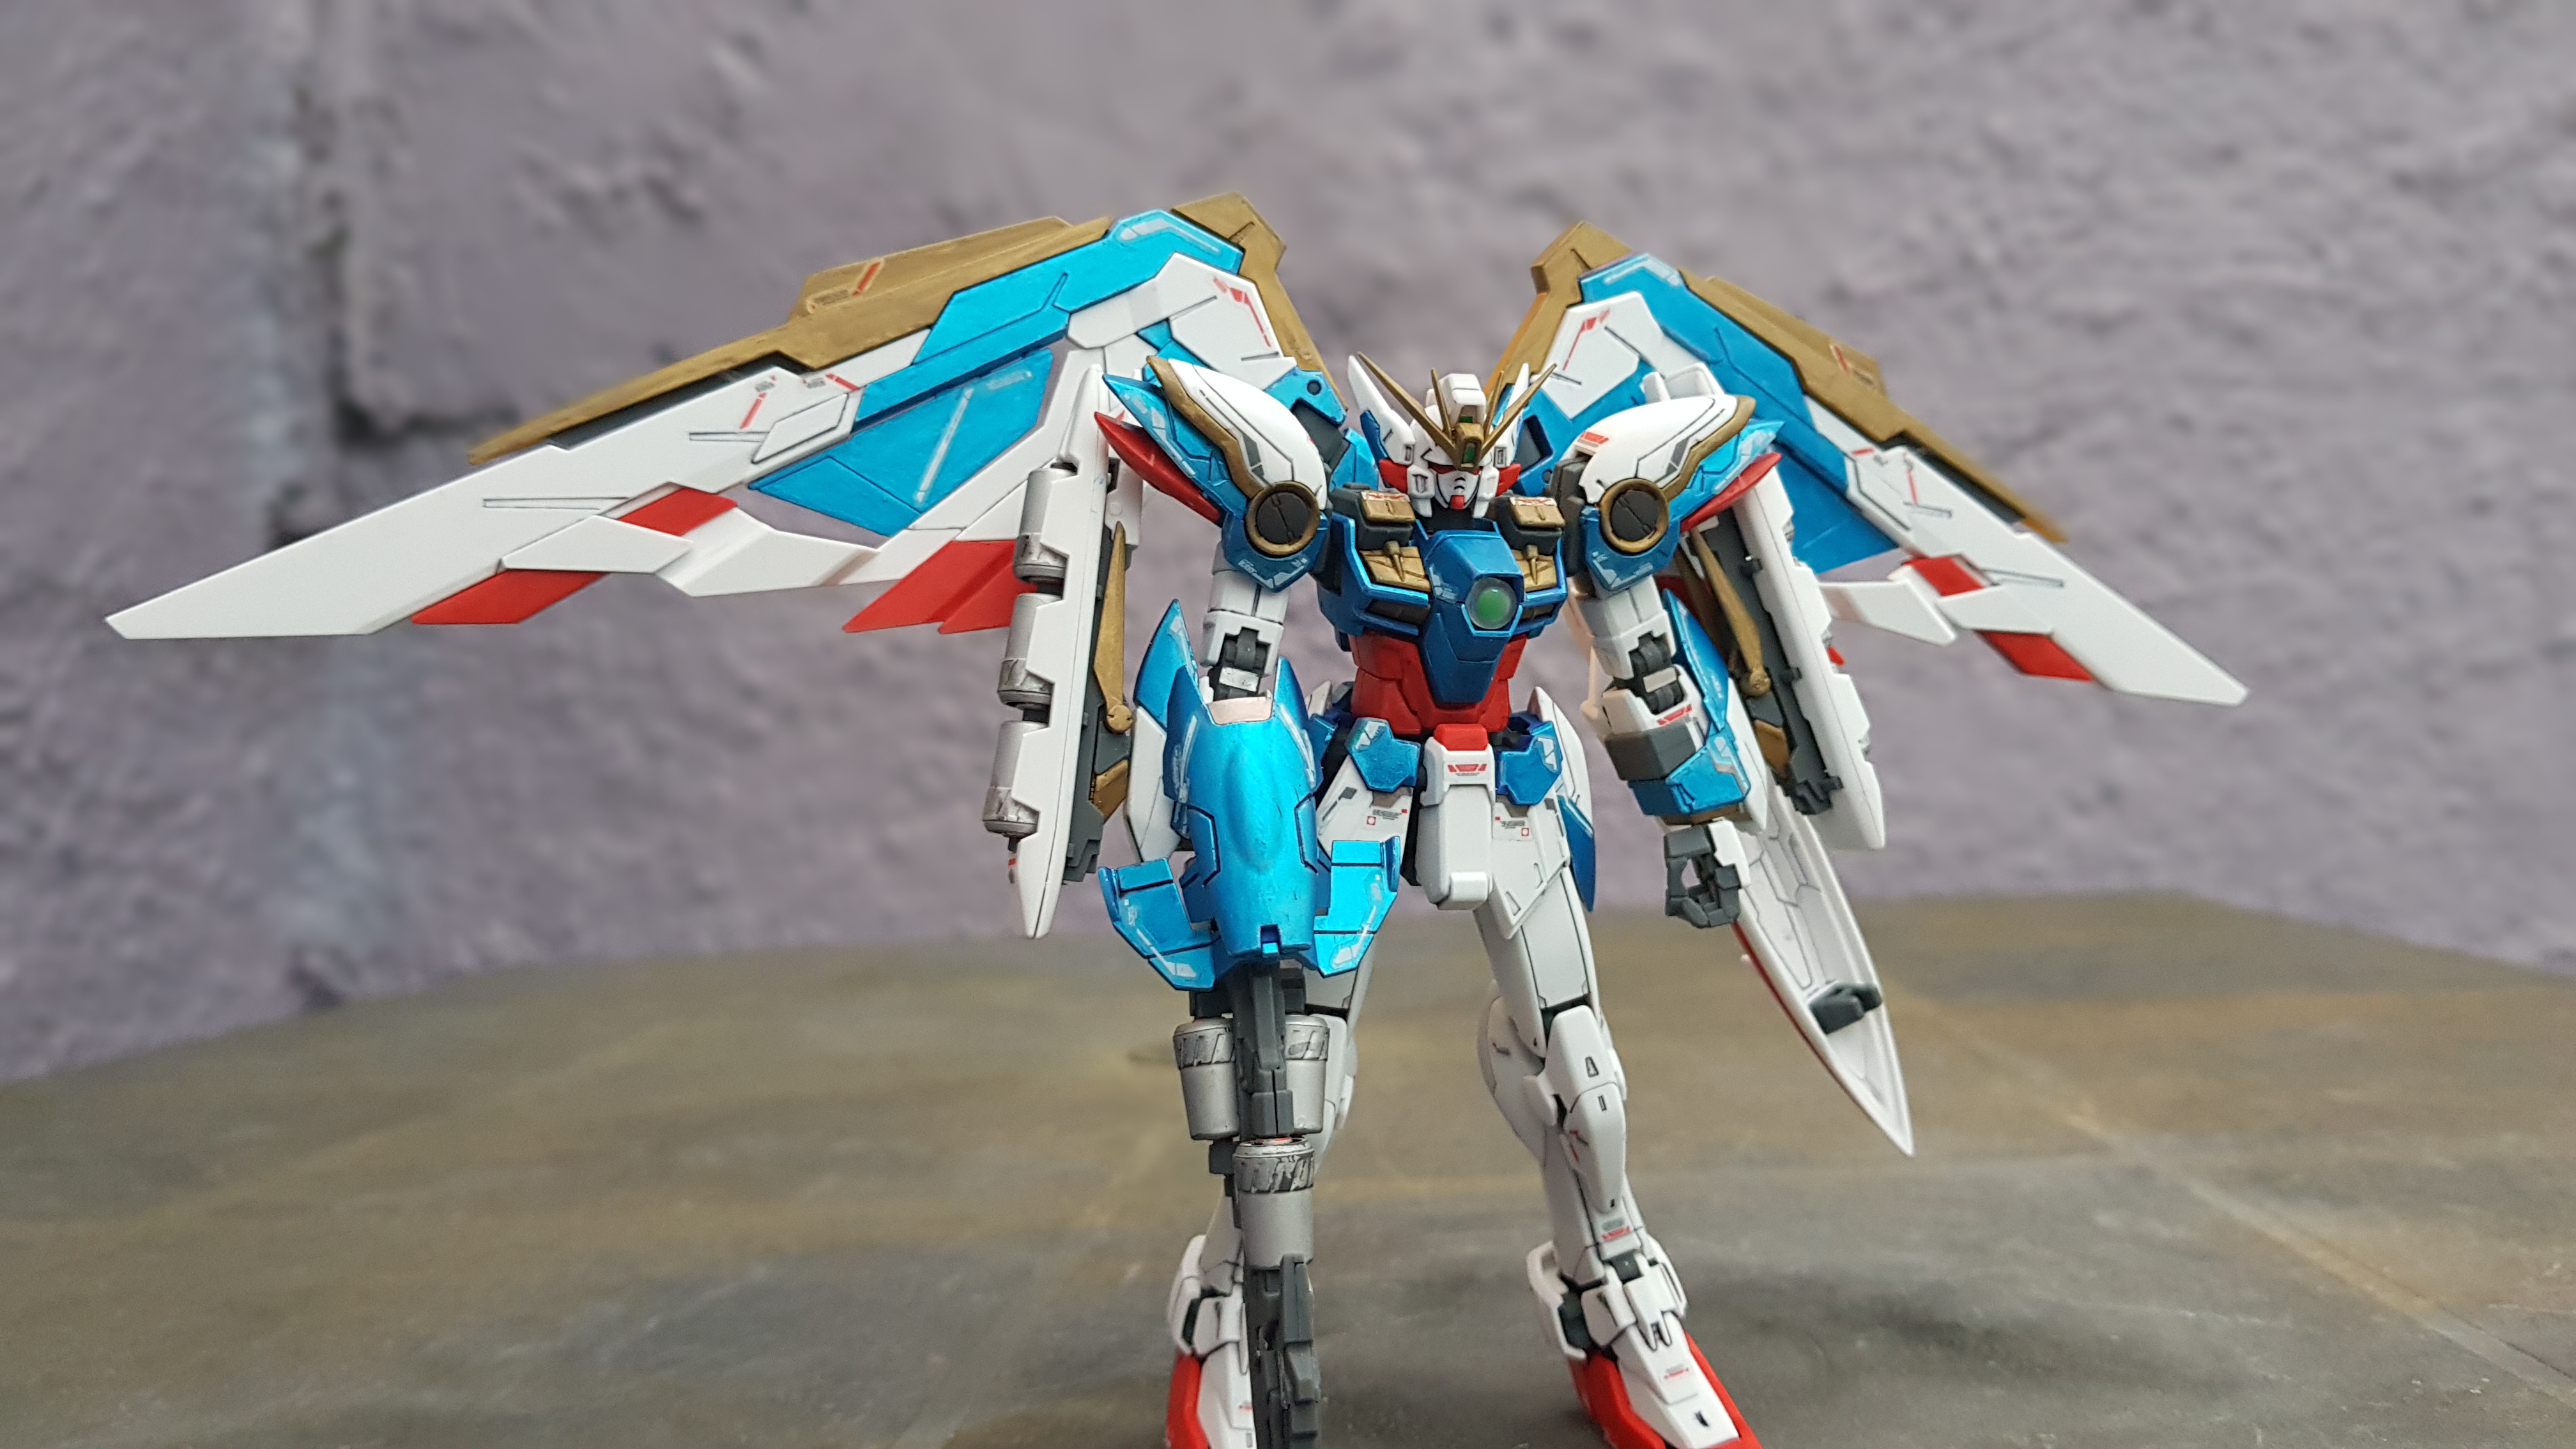 Gundam Bandai RG Aile Strike Gundam Seed Mô Hình Nhựa Đồ Chơi Lắp Ráp Anime  Nhật Tỷ lệ 1144  Lazadavn